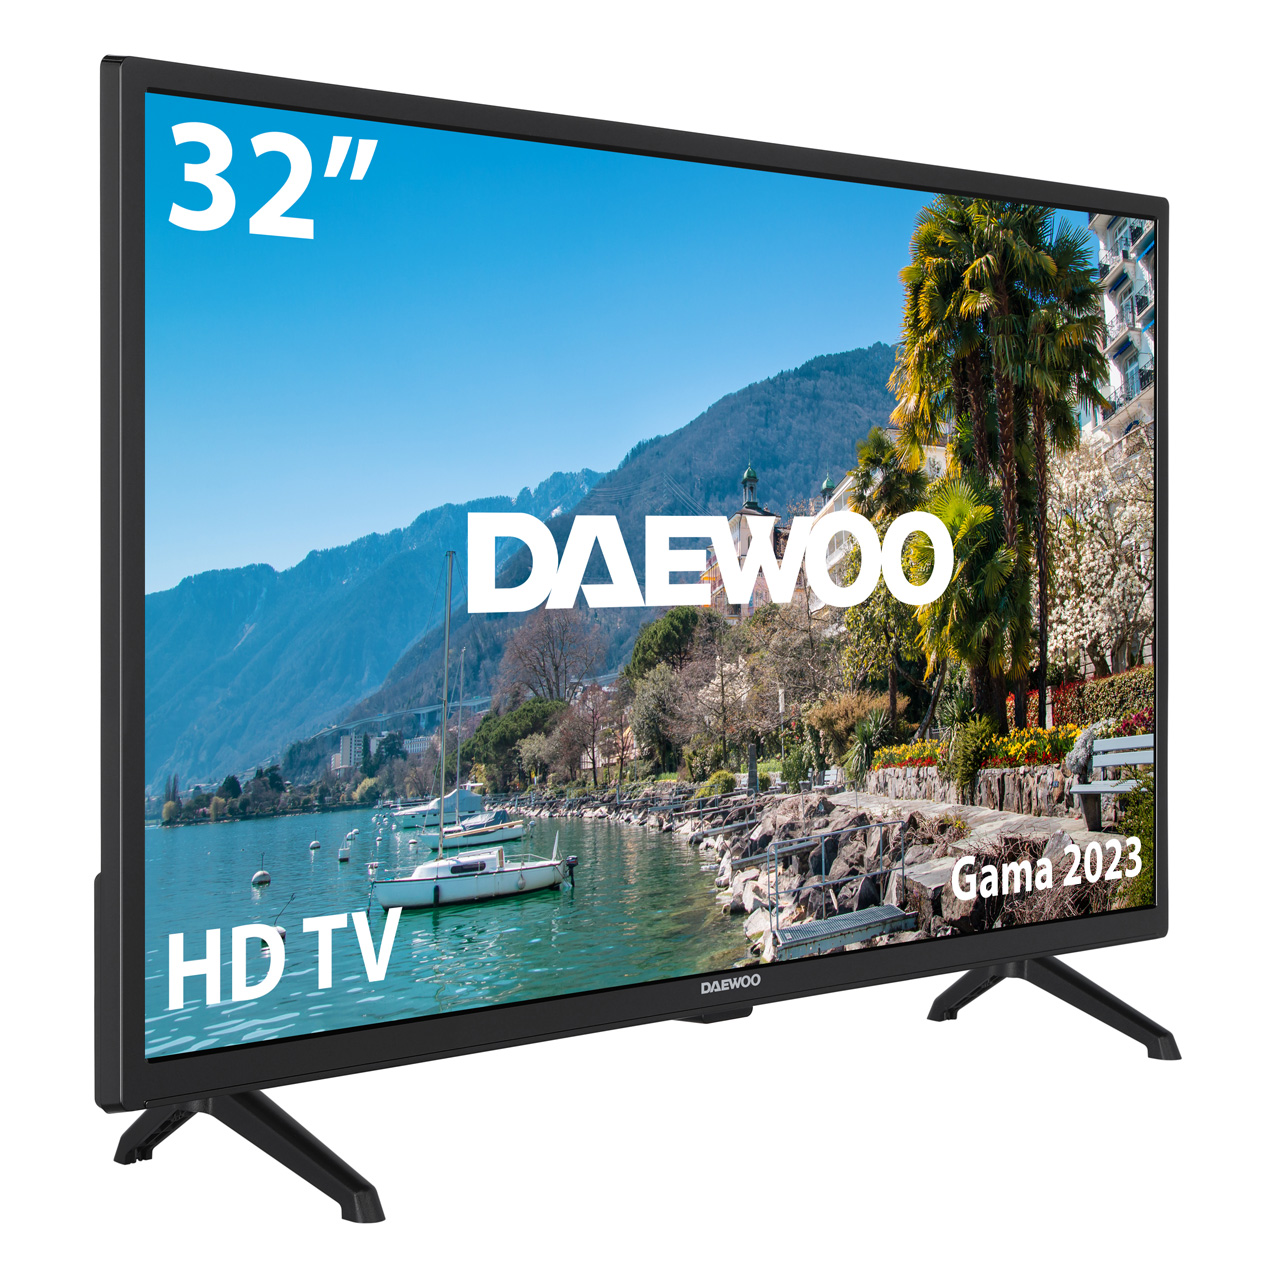 Televisores SMART TV - Categorías - Alcampo supermercado online